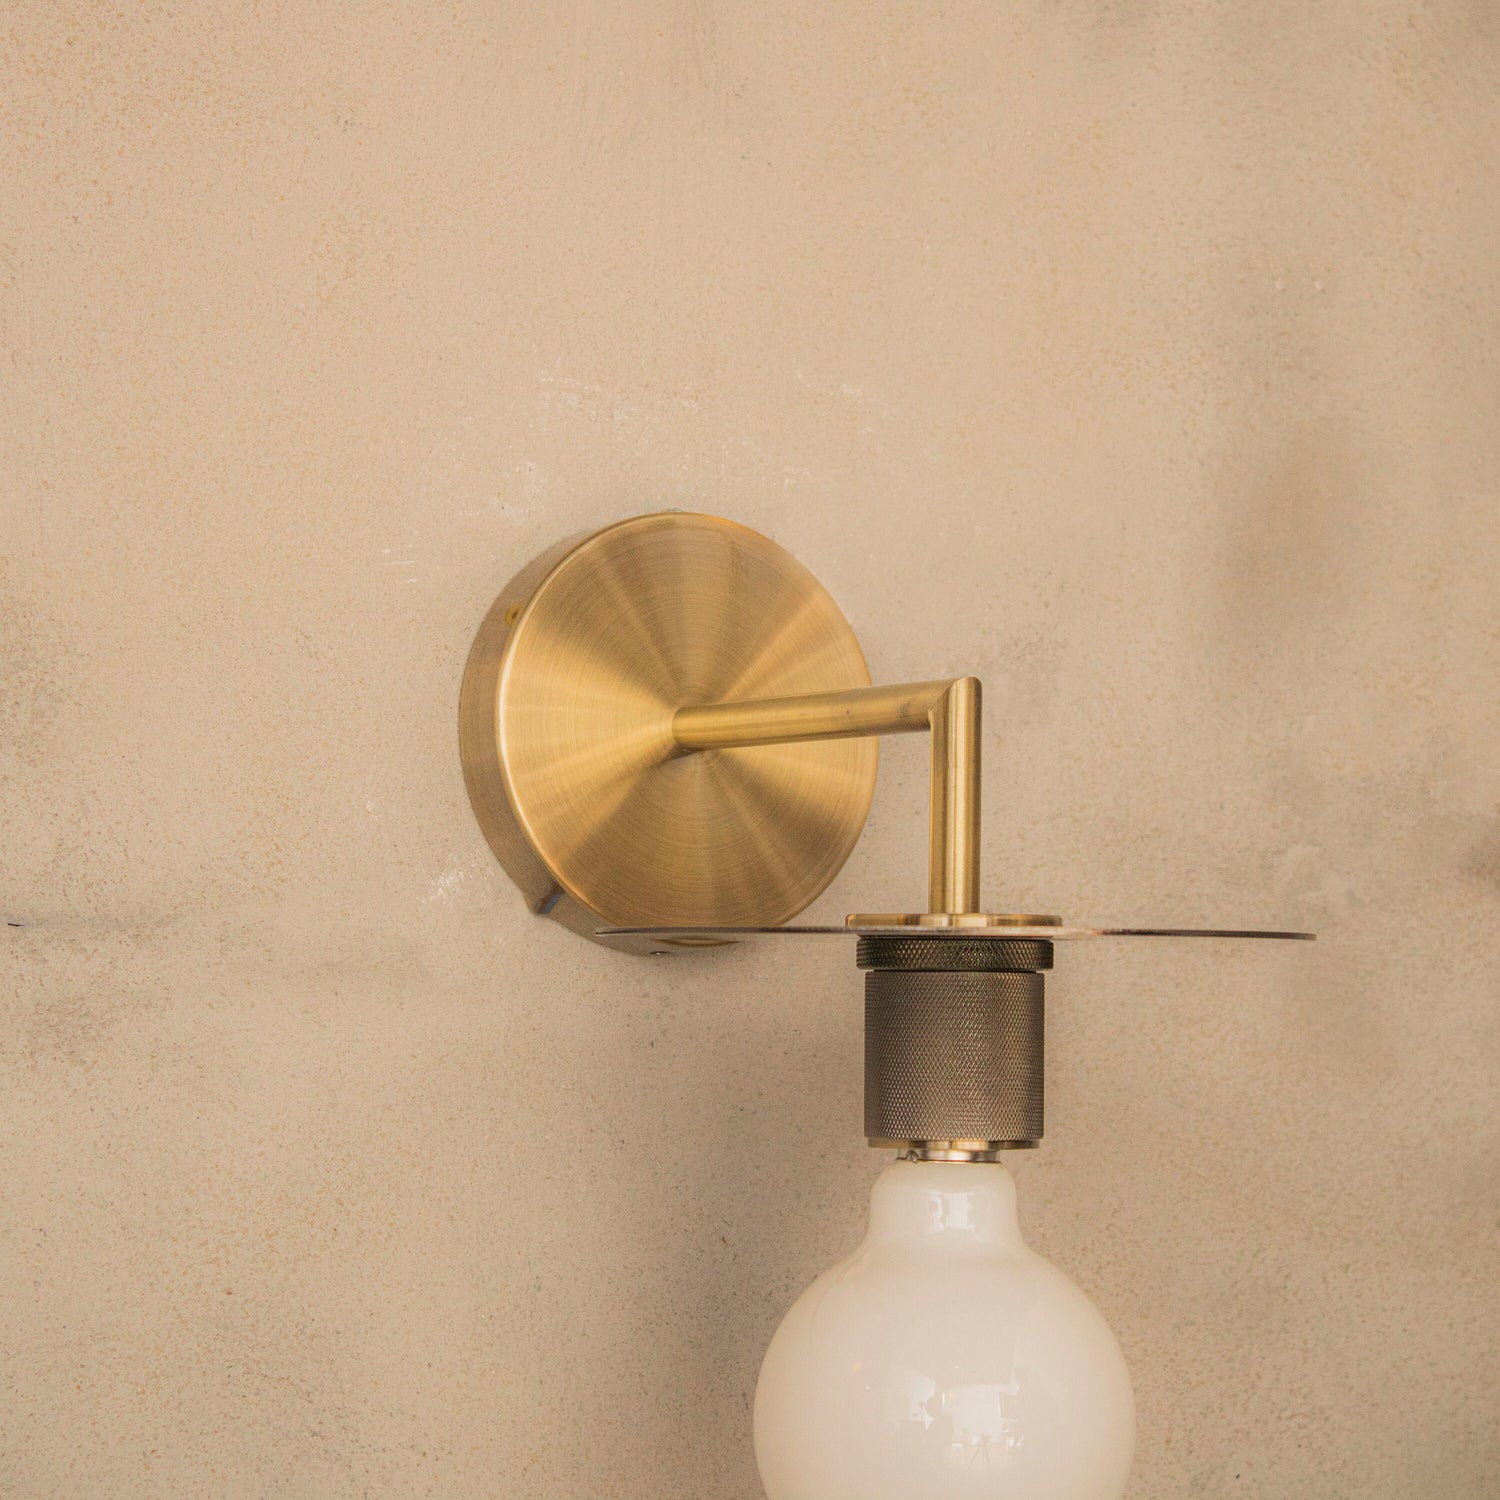 Brass Wall Mounted Lamp, Art Deco Bedroom Sconce, Entryway Light, Housewarming Gift Wall Light, Hanging Wall Lighting MODEL: ARLON